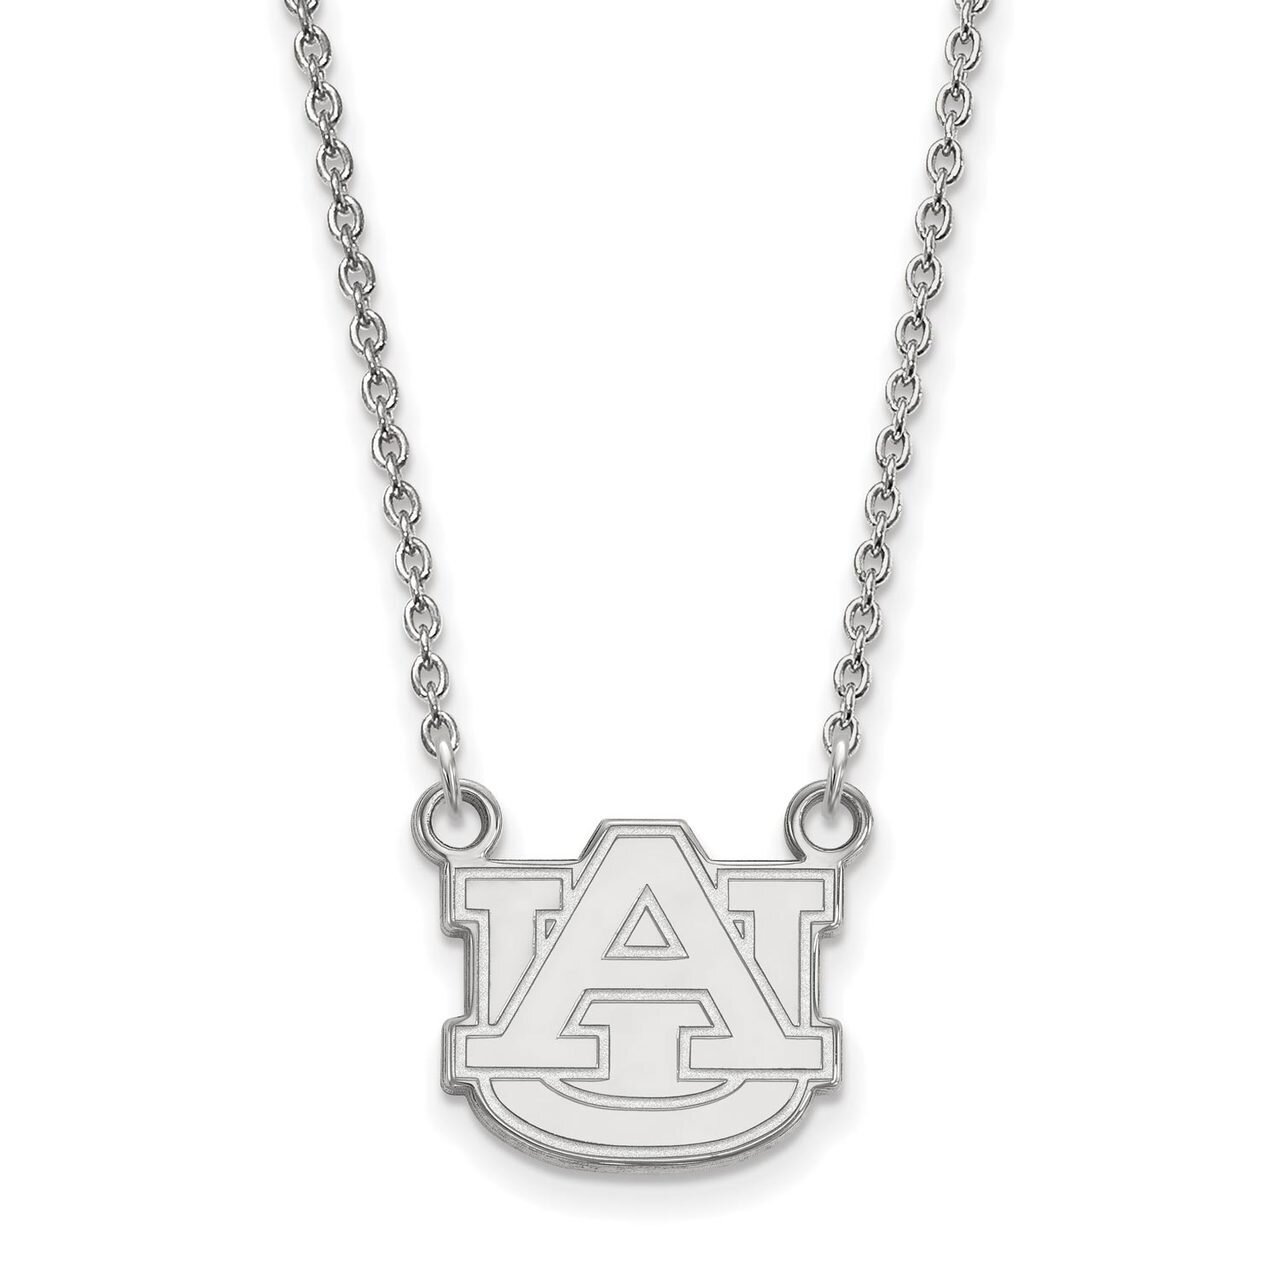 Auburn University Small Pendant with Chain Necklace 14k White Gold 4W015AU-18